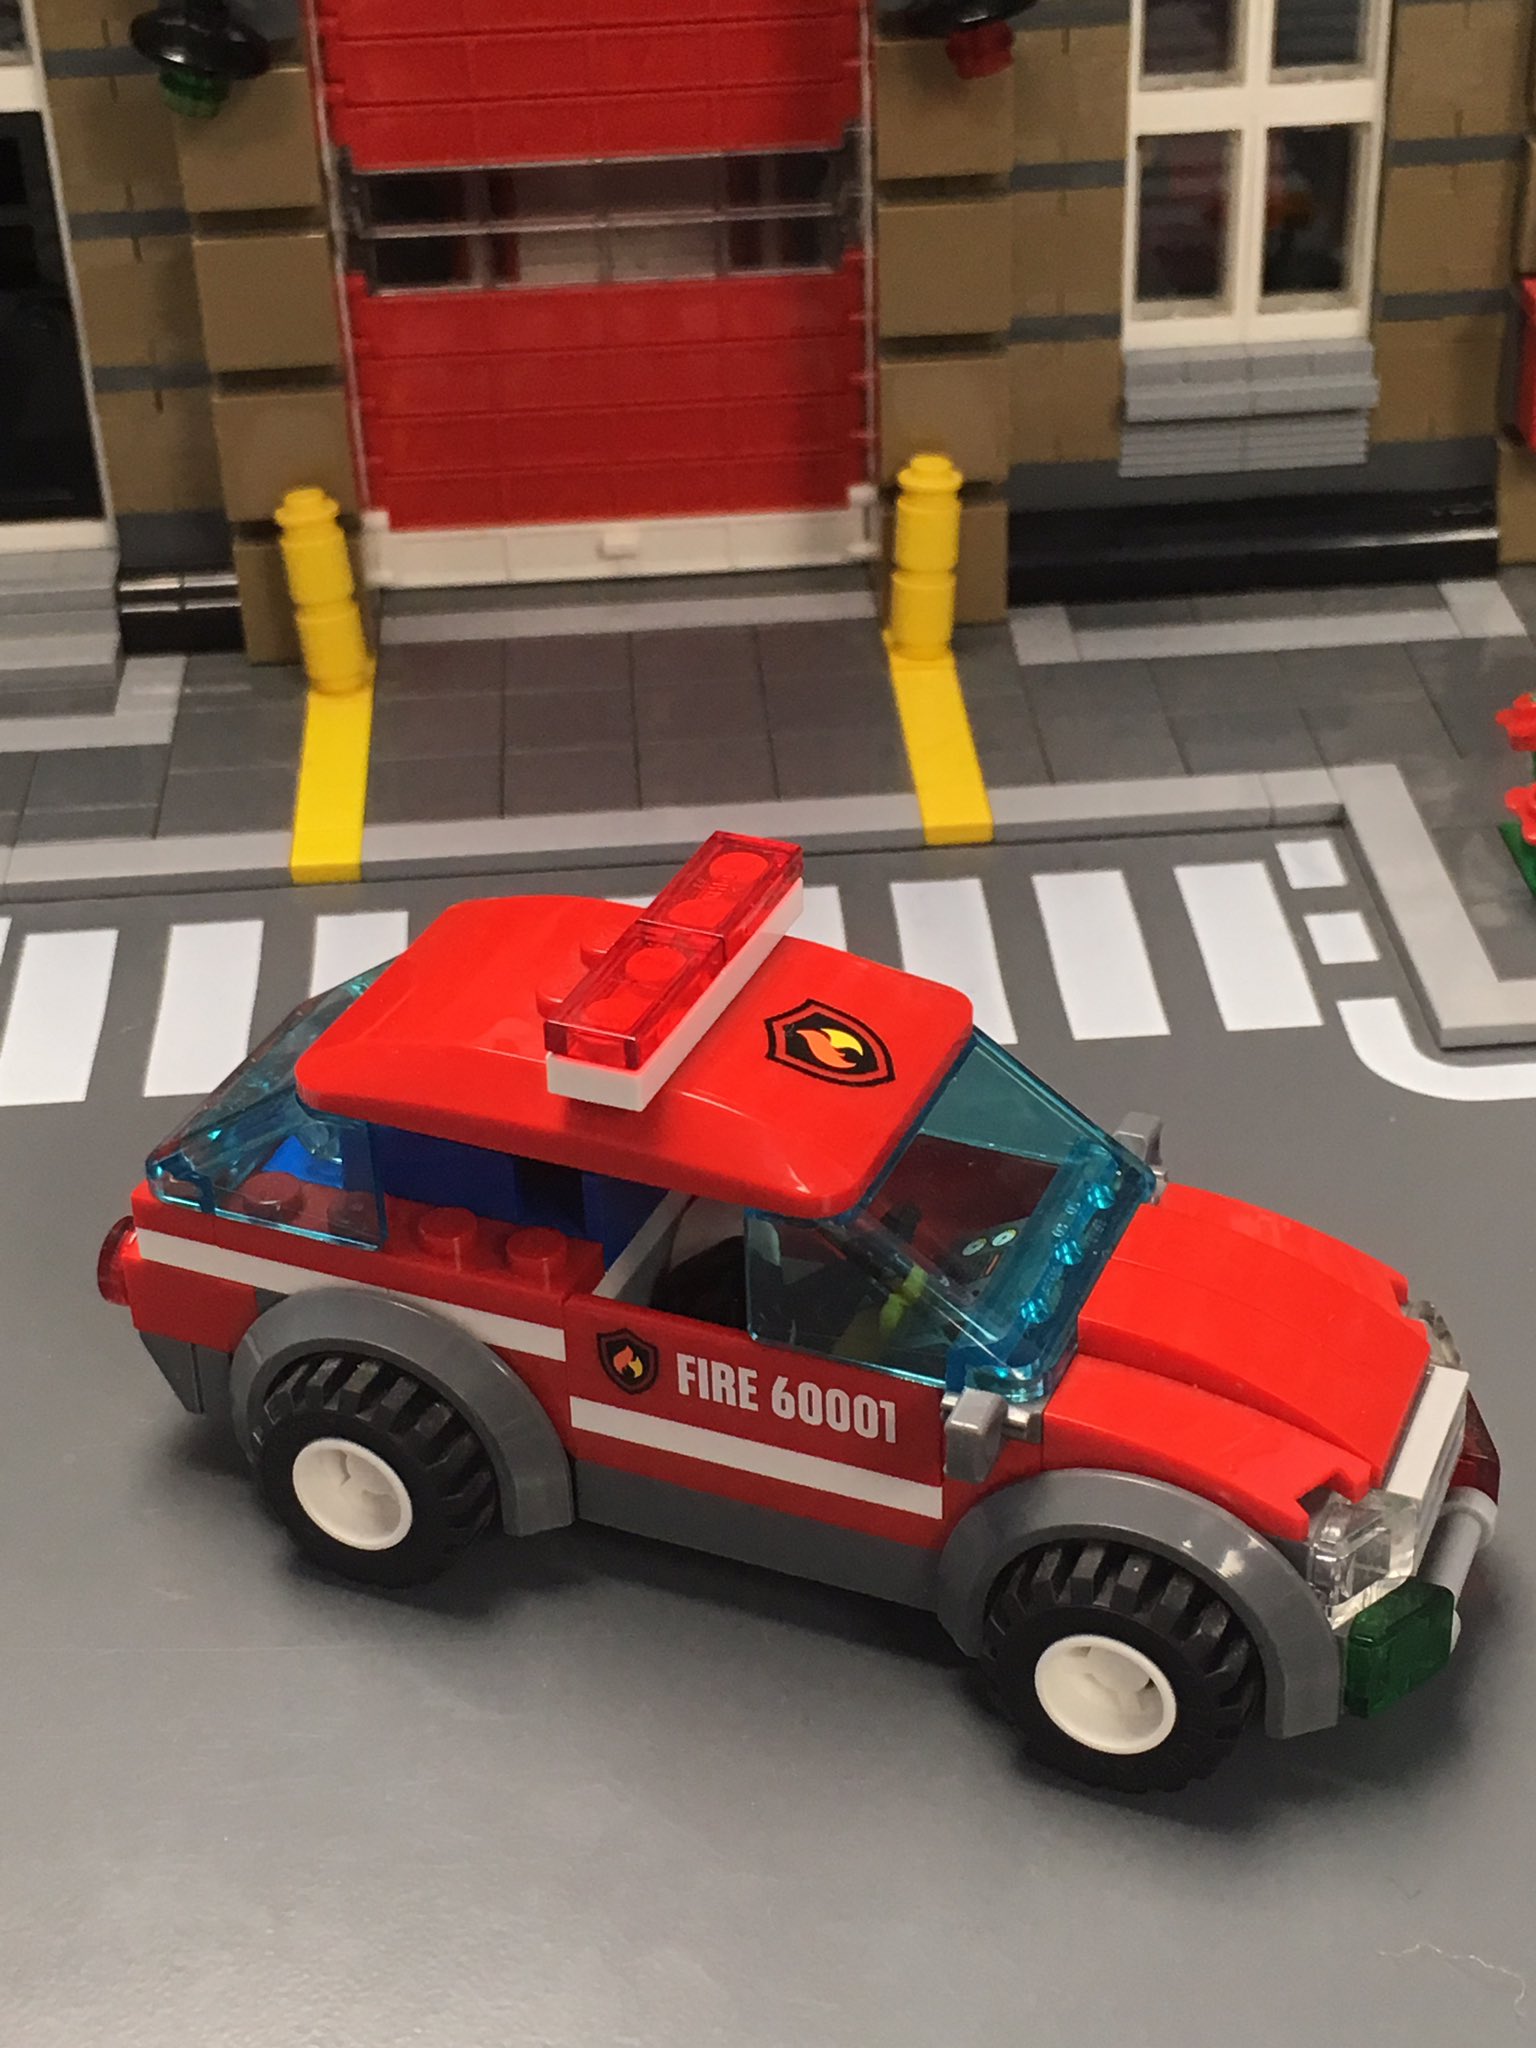 New Lego City on Twitter: "Cars 2-4, 2014 Chevy Impala. Chiefs vehicles. https://t.co/5d7pkmNDri" / Twitter